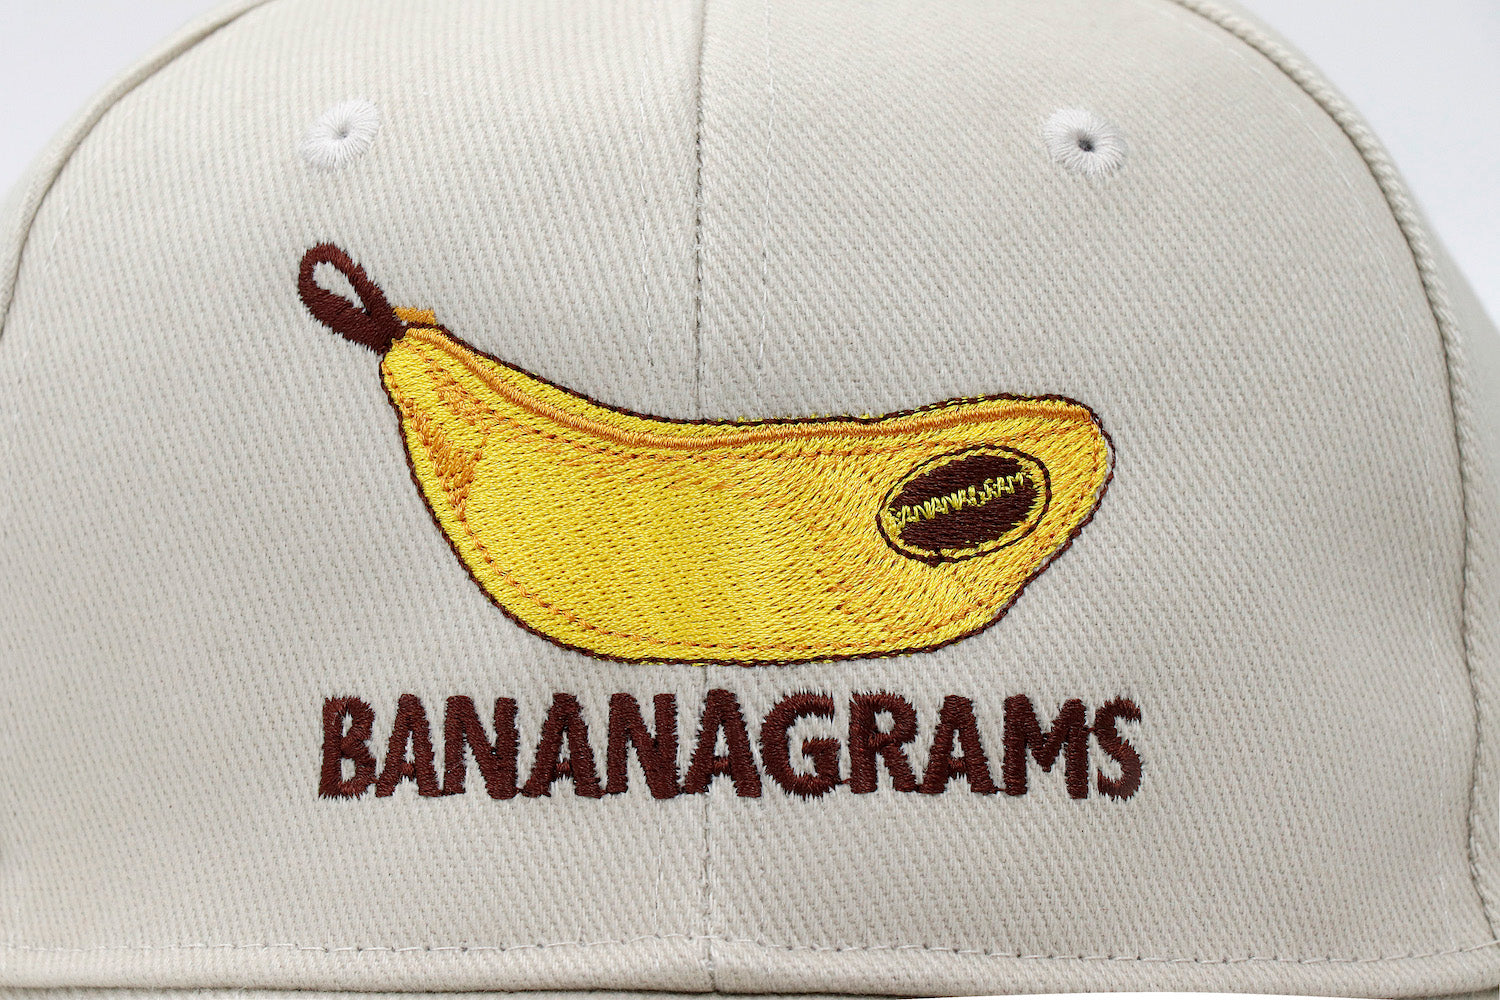 BANANAGRAMS Hat